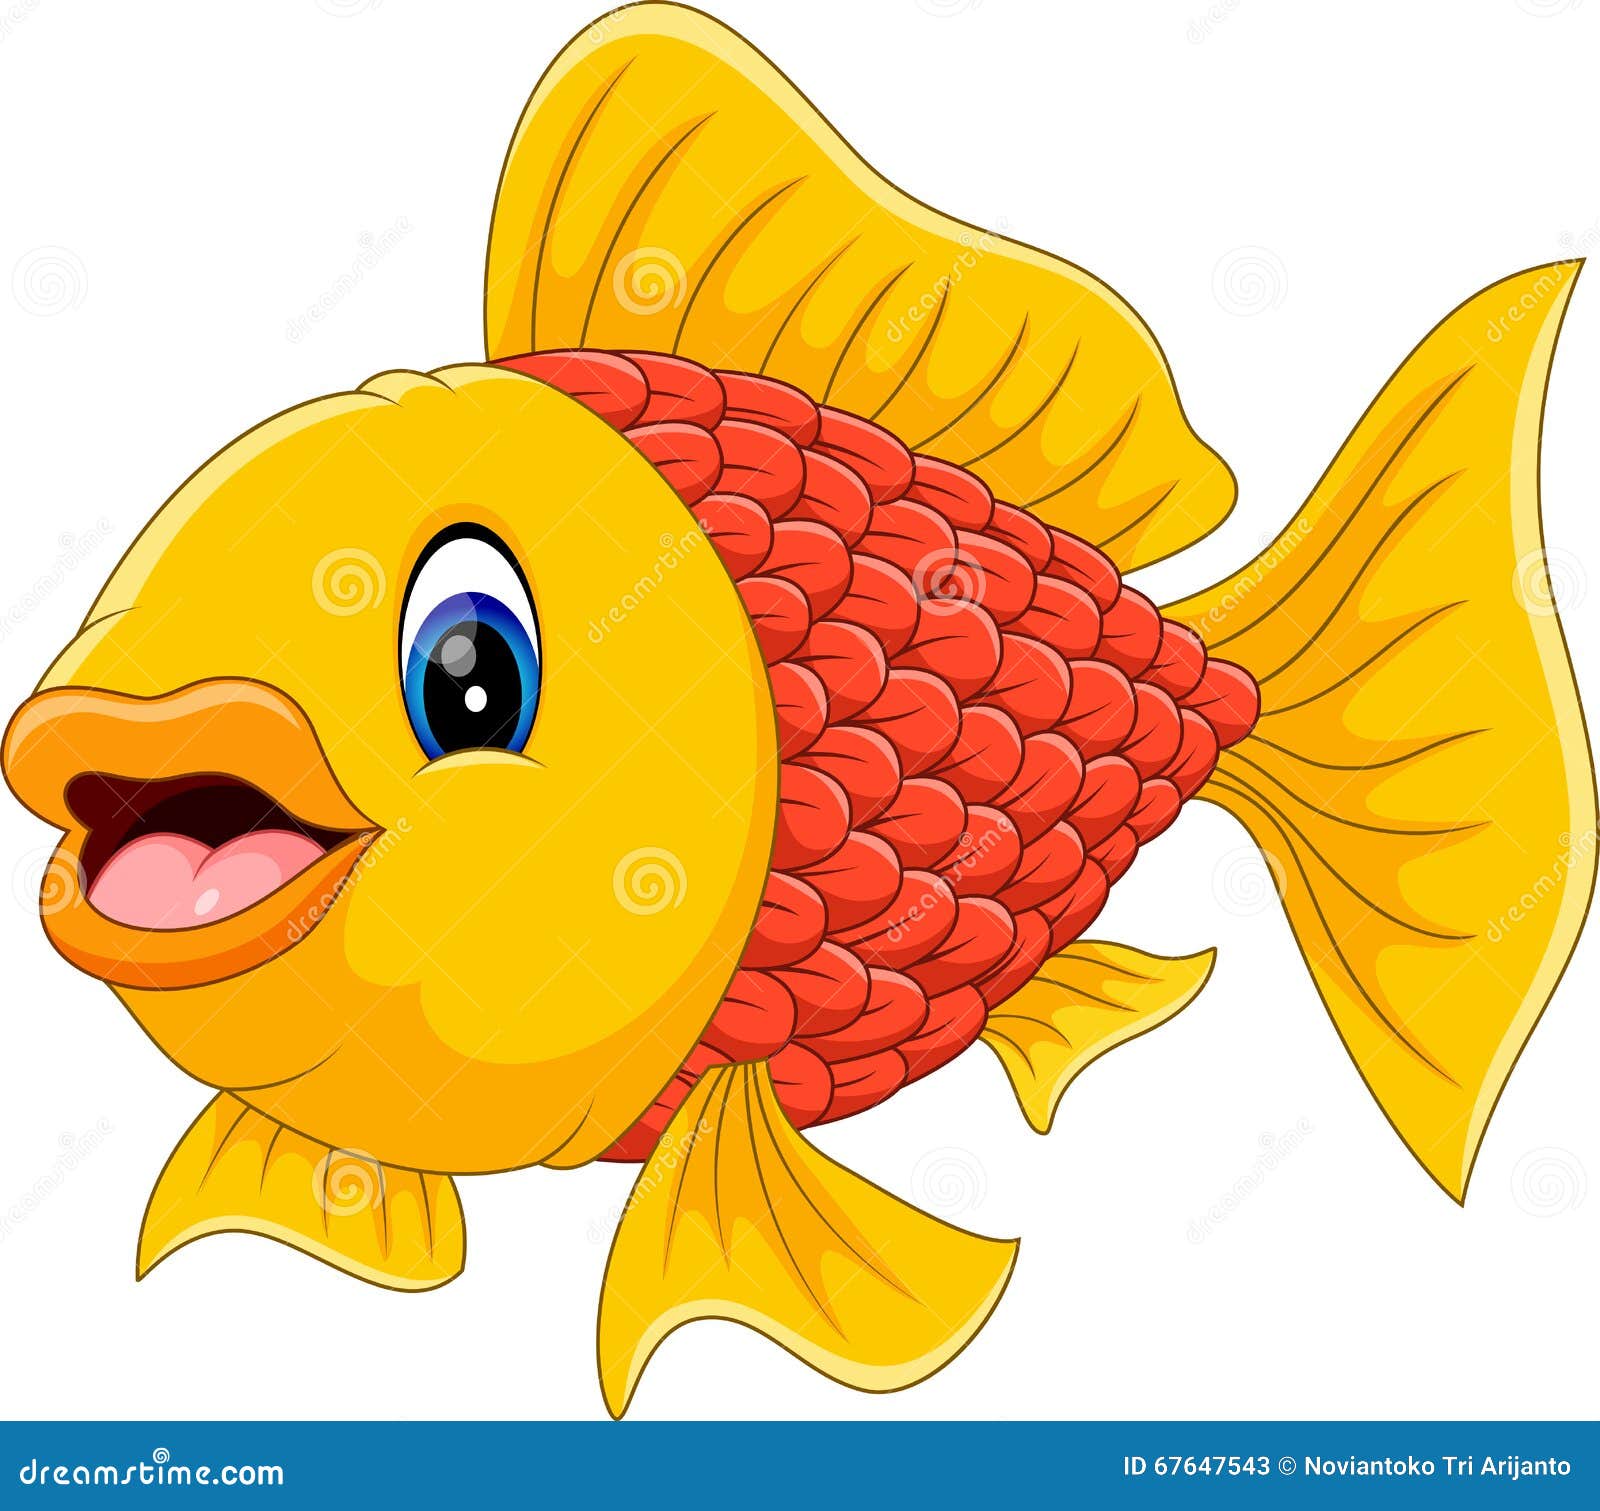 Cute fish cartoon stock vector. Illustration of animal - 67647543